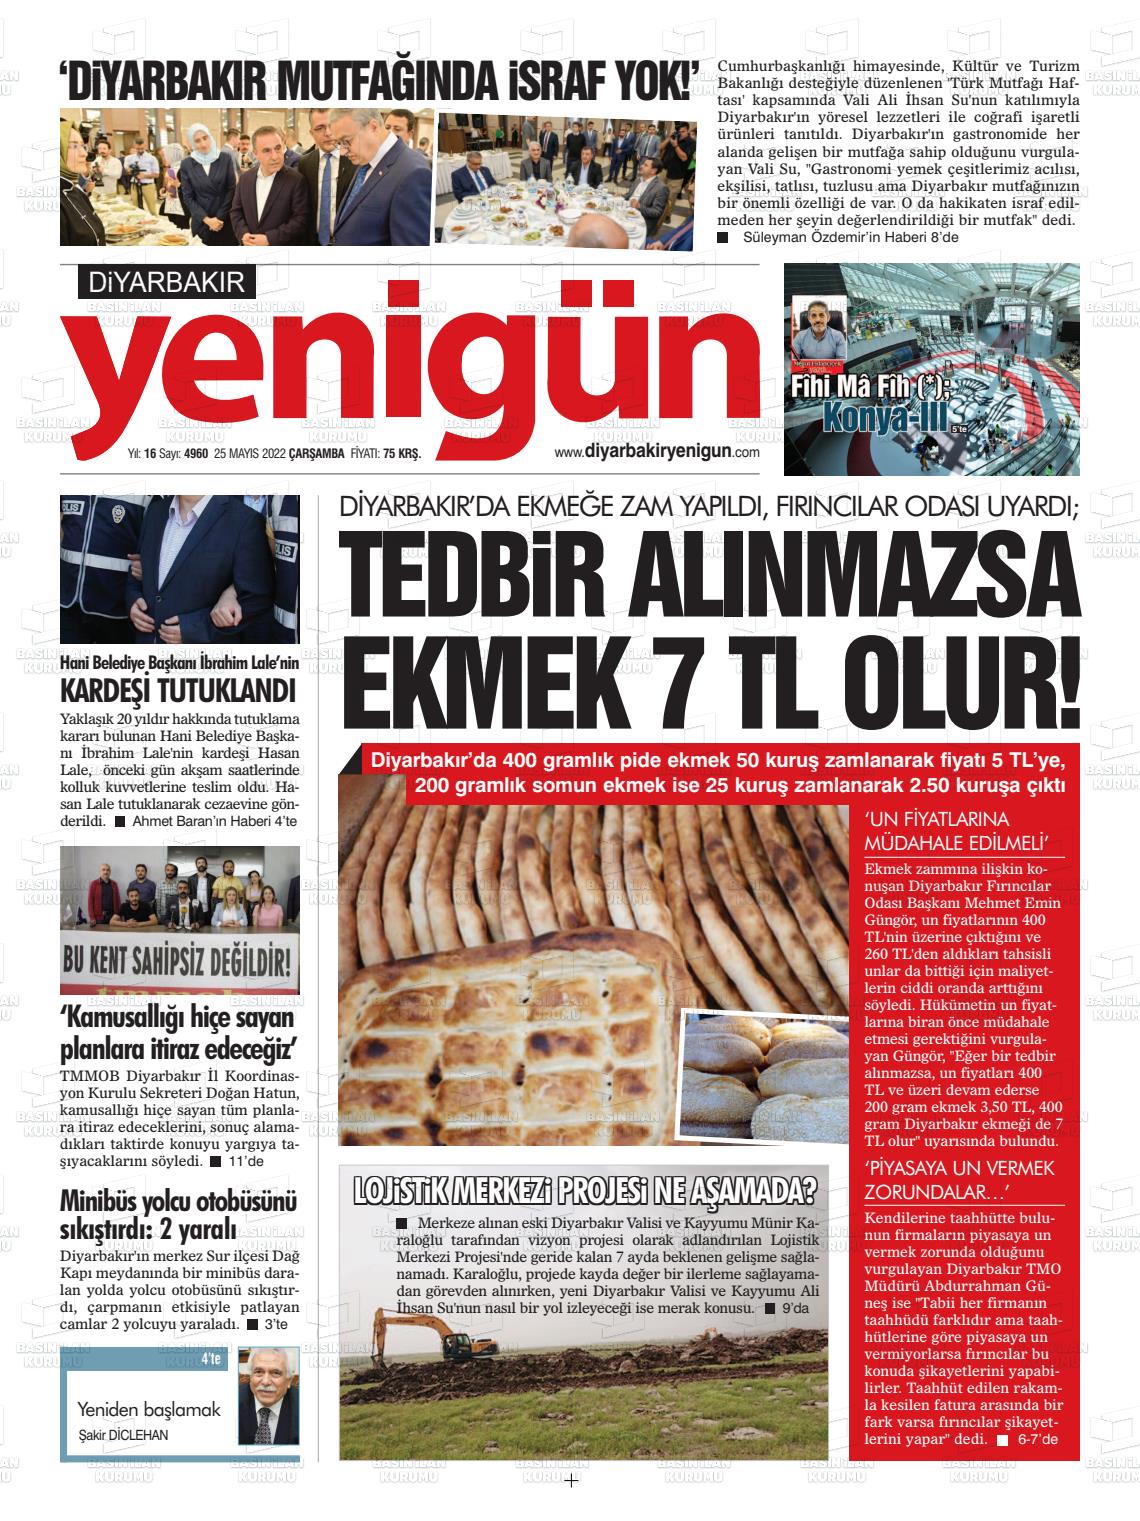 25 Mayıs 2022 Diyarbakır Yenigün Gazete Manşeti